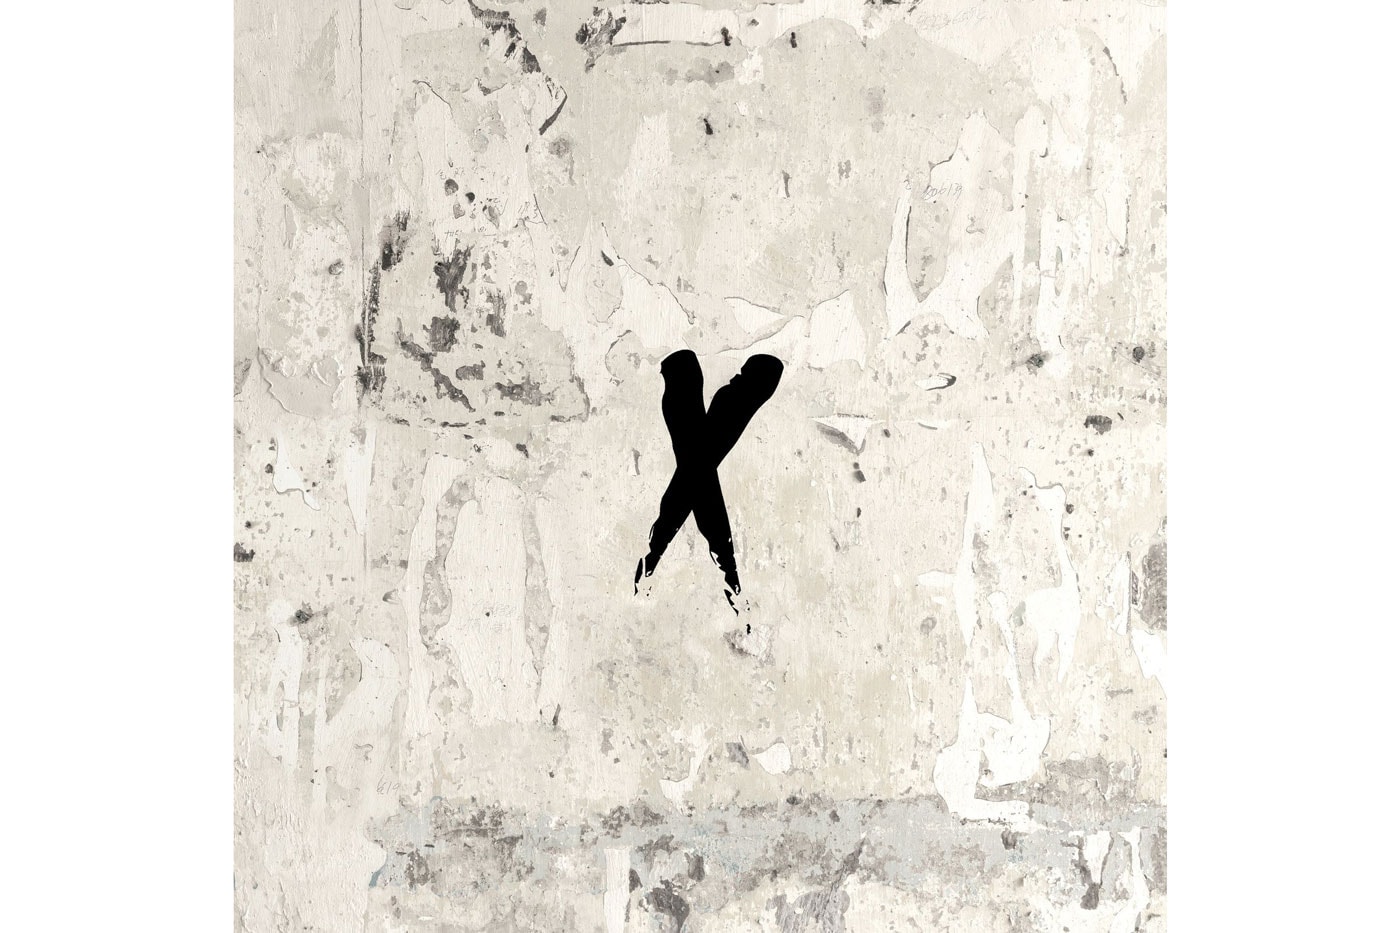 NxWorries (Anderson .Paak & Knxwledge) Share New Single, "Get Bigger / Do U Luv"